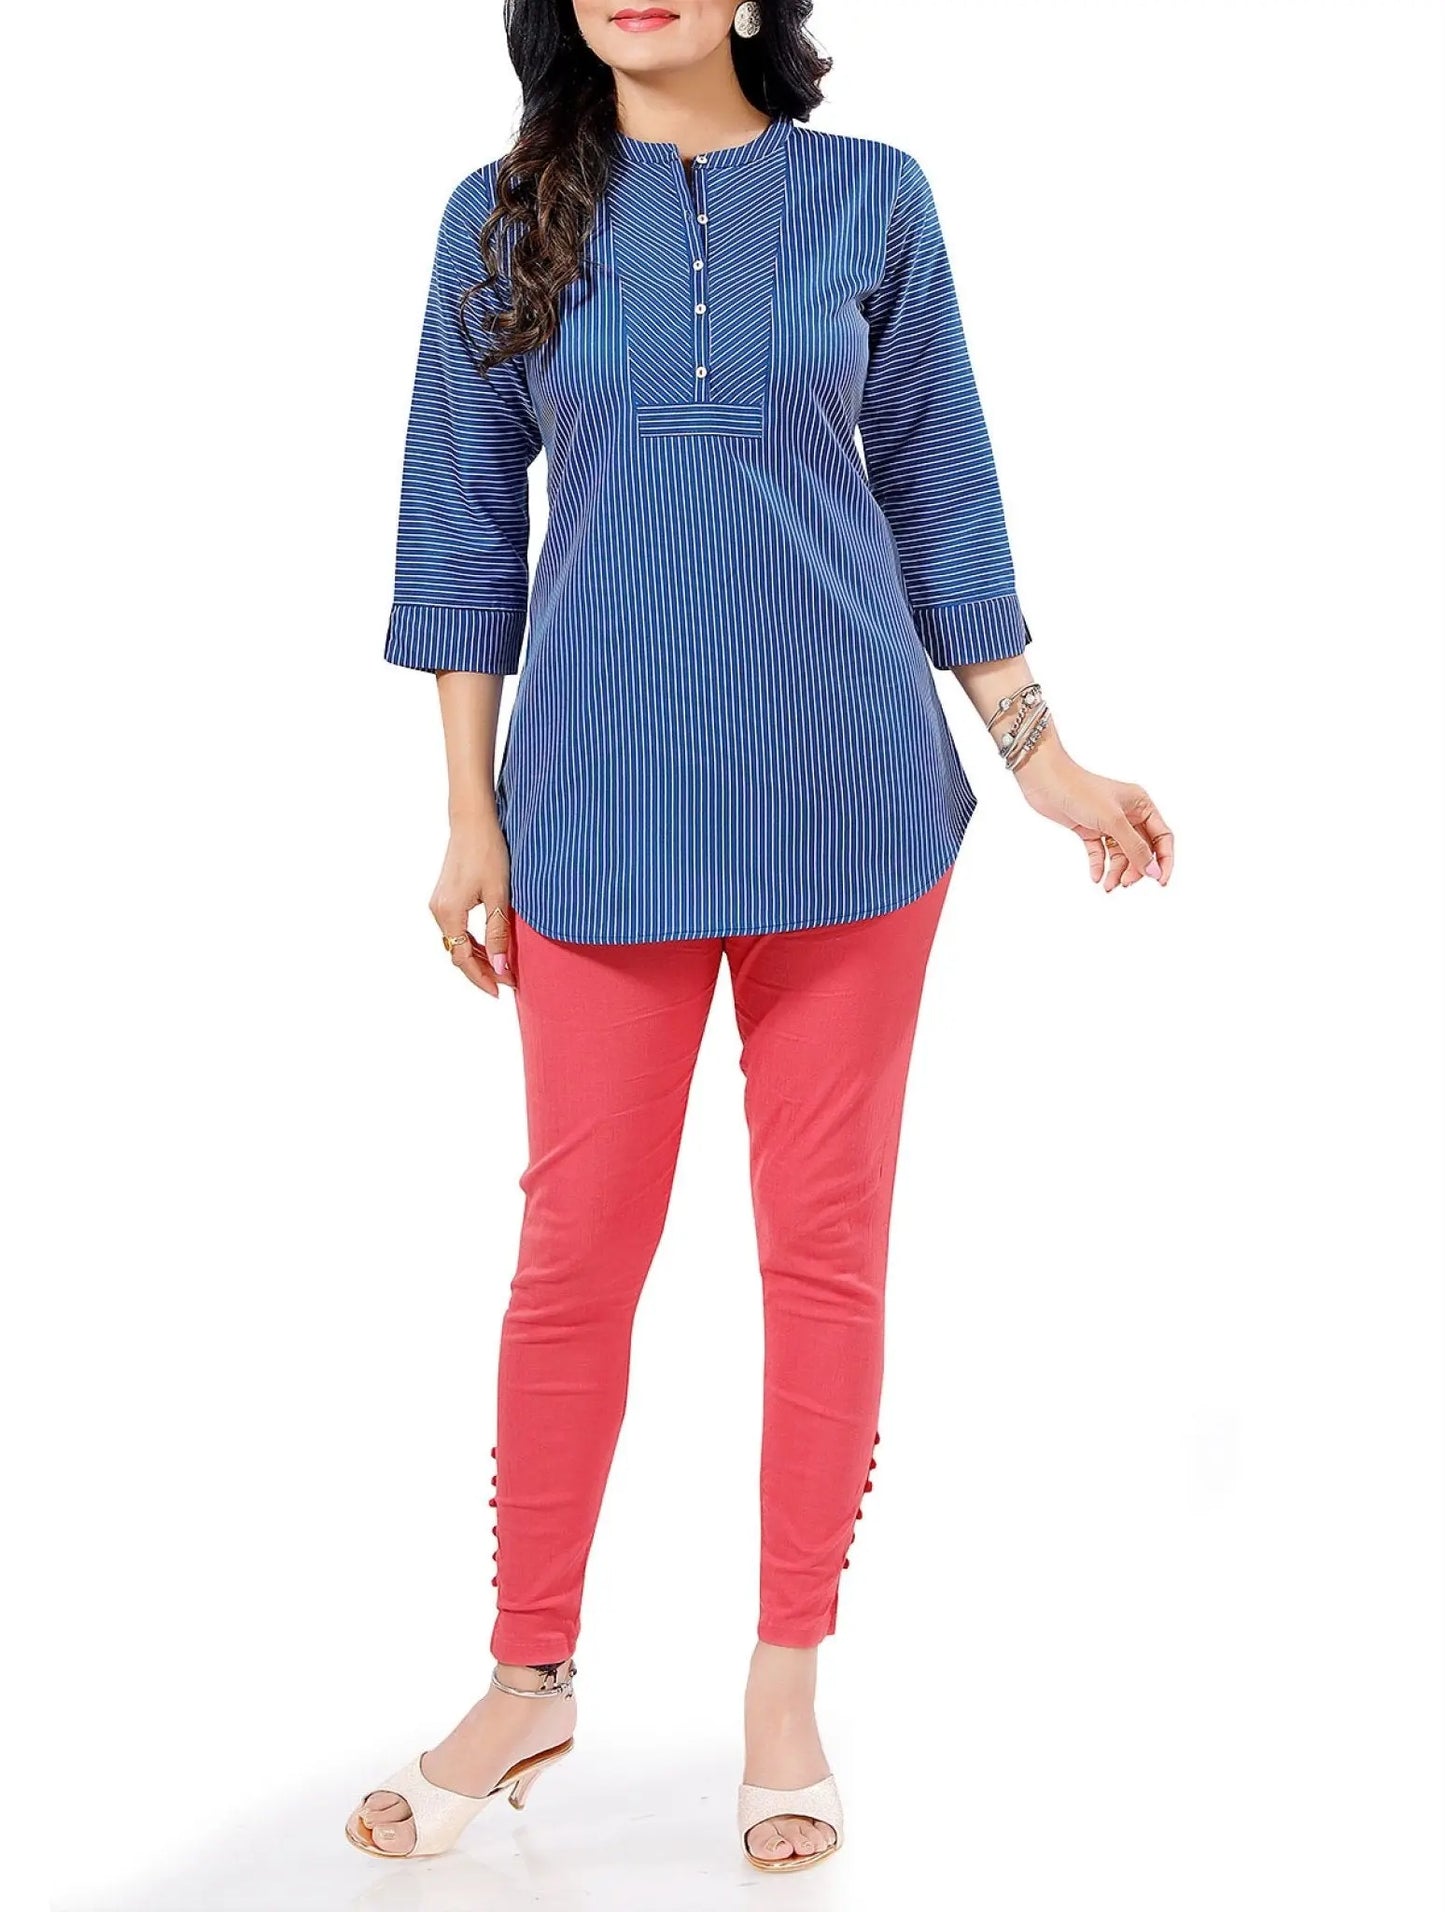 IshDeena Women's Indian Kurtis - Short Tunic Tops, Cotton Rayon, Casual Designer Prints, M-2XL - Stylish 1-Piece Indian Style - IshDeena